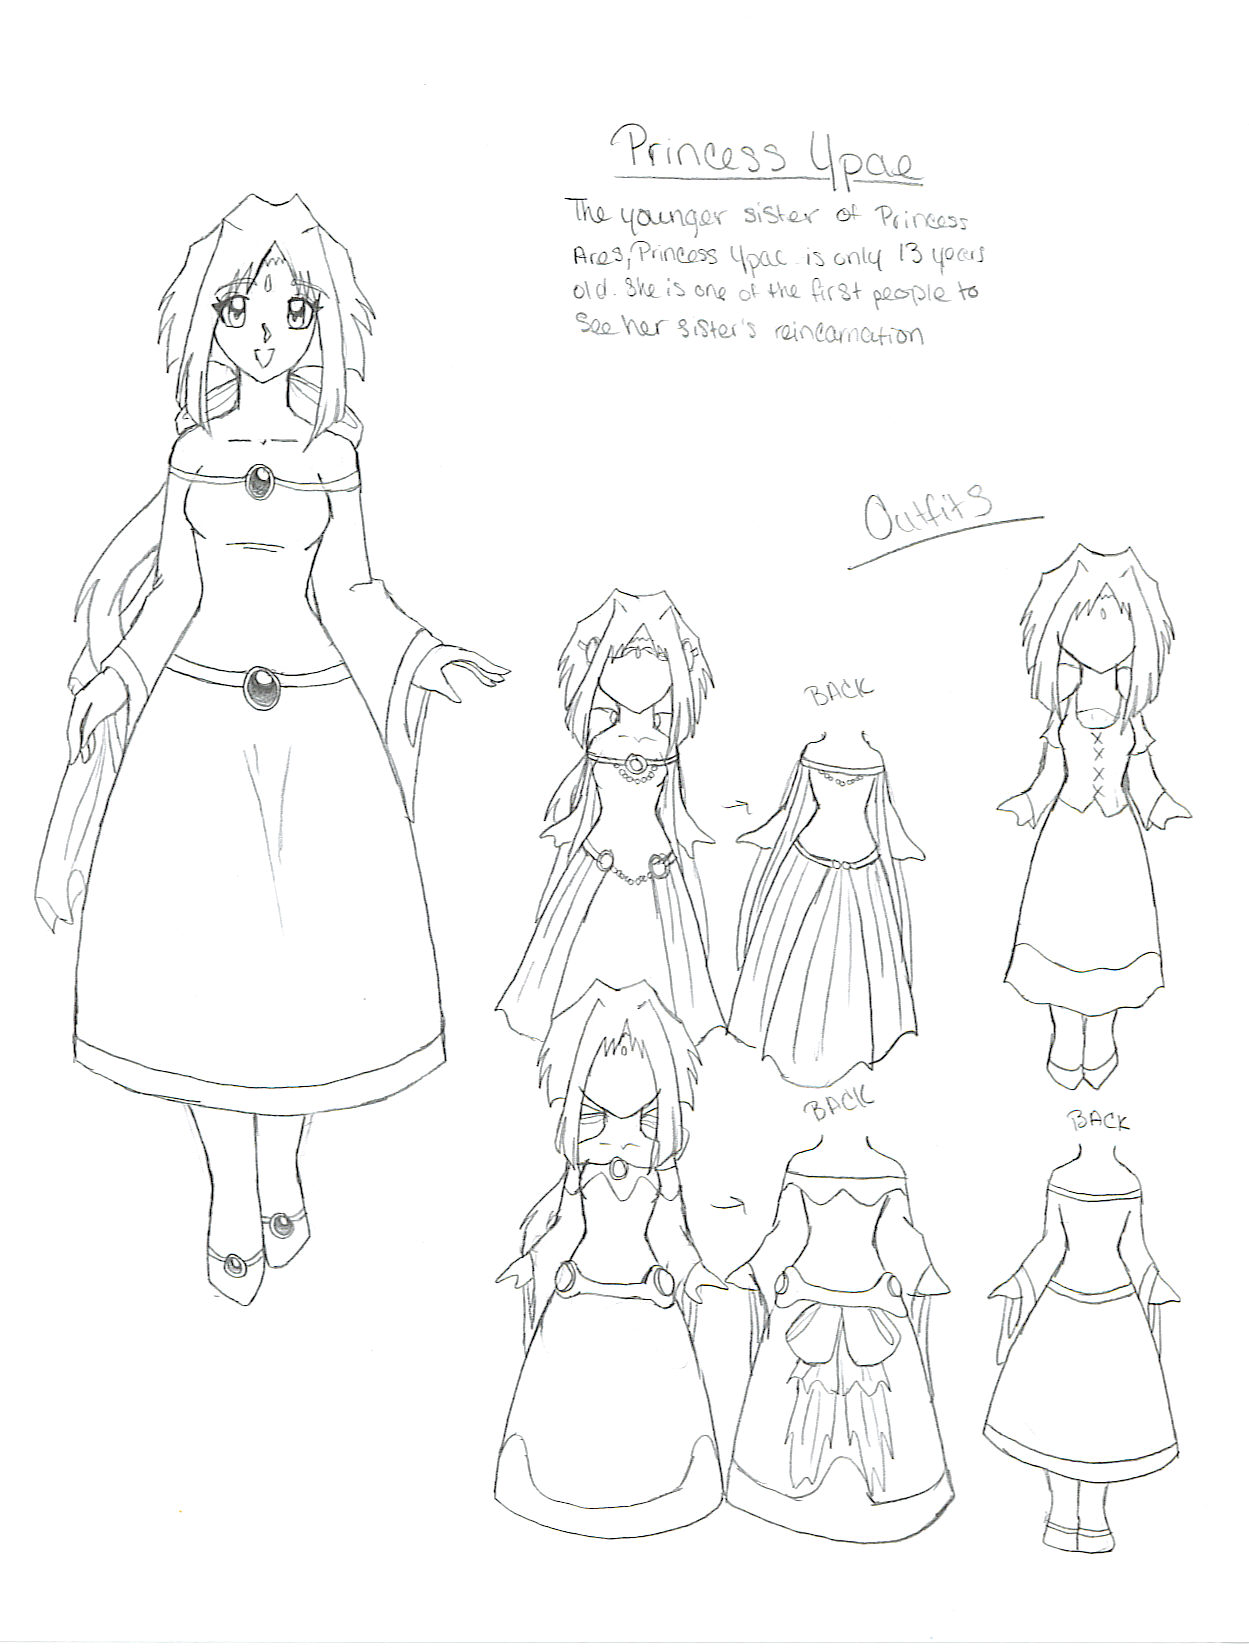 Profile: Princess Ypae by AnimeMangaLover